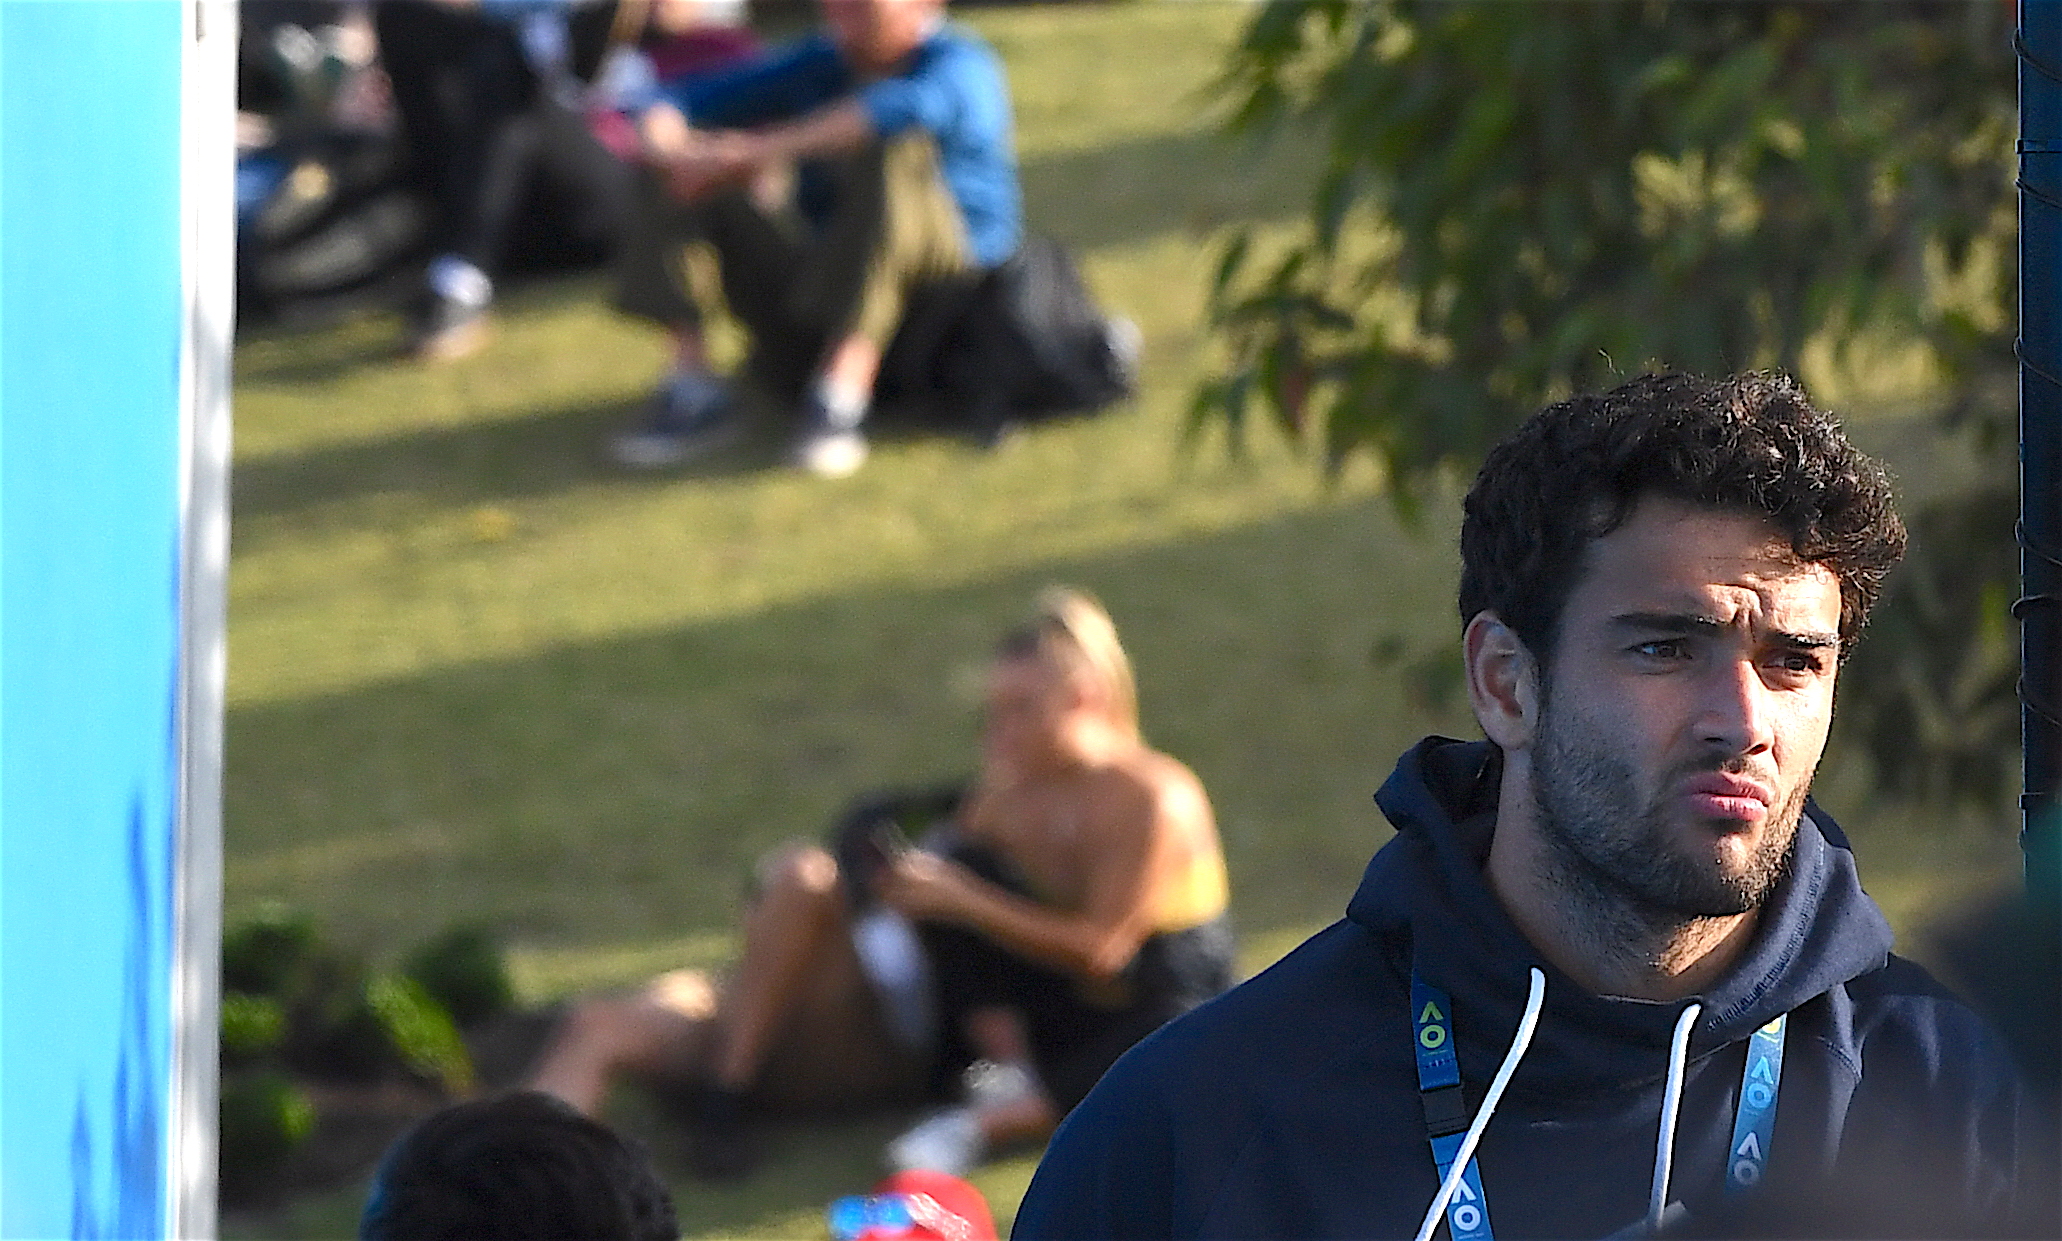 Australian Open 2020: Matteo Berrettini spettatore